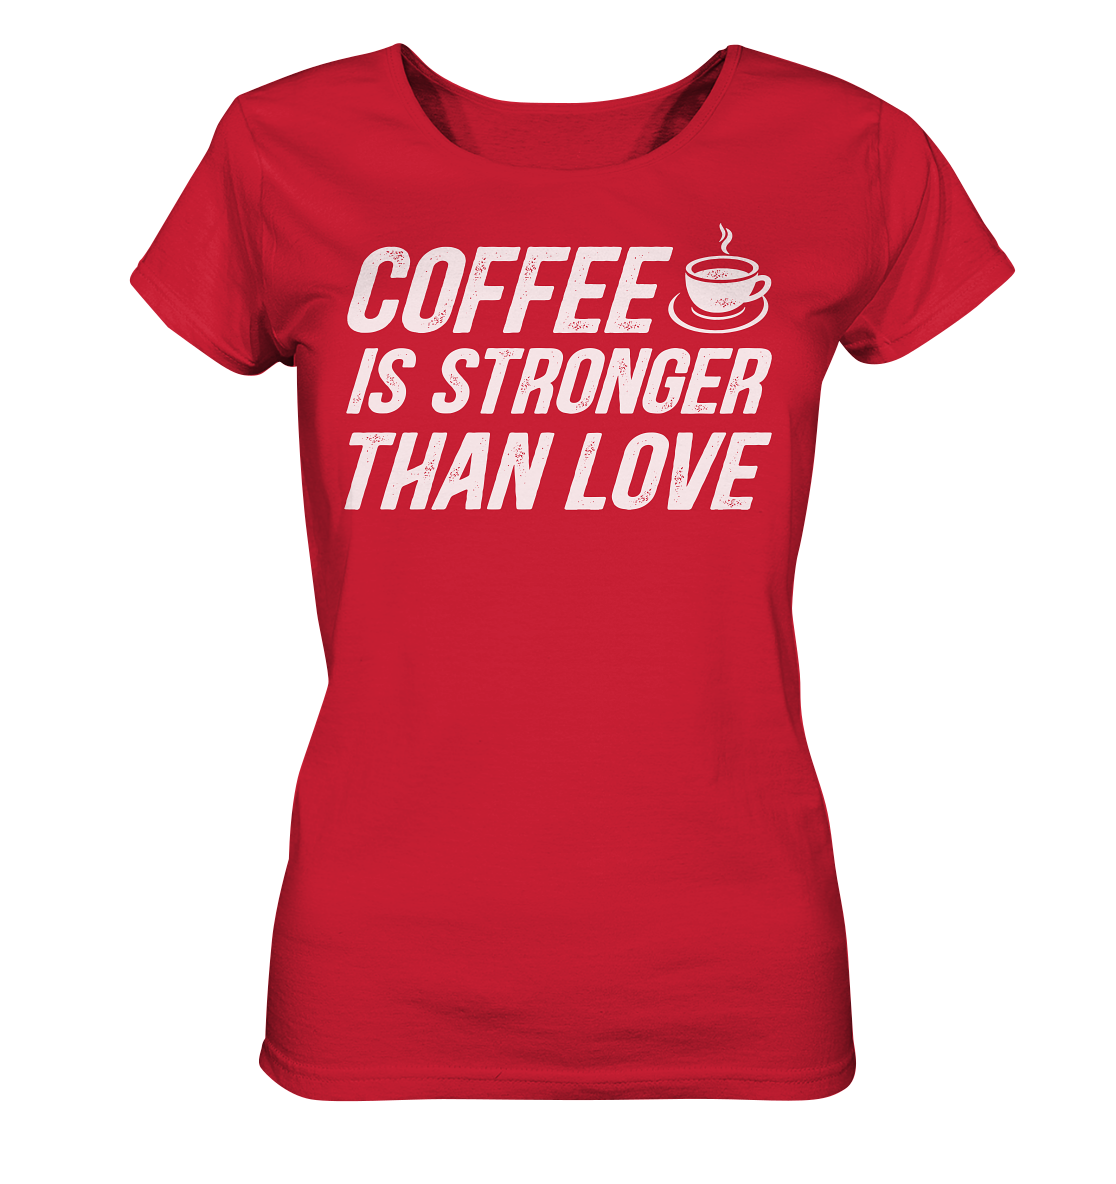 Coffee is stronger than love - Ladies Organic Shirt